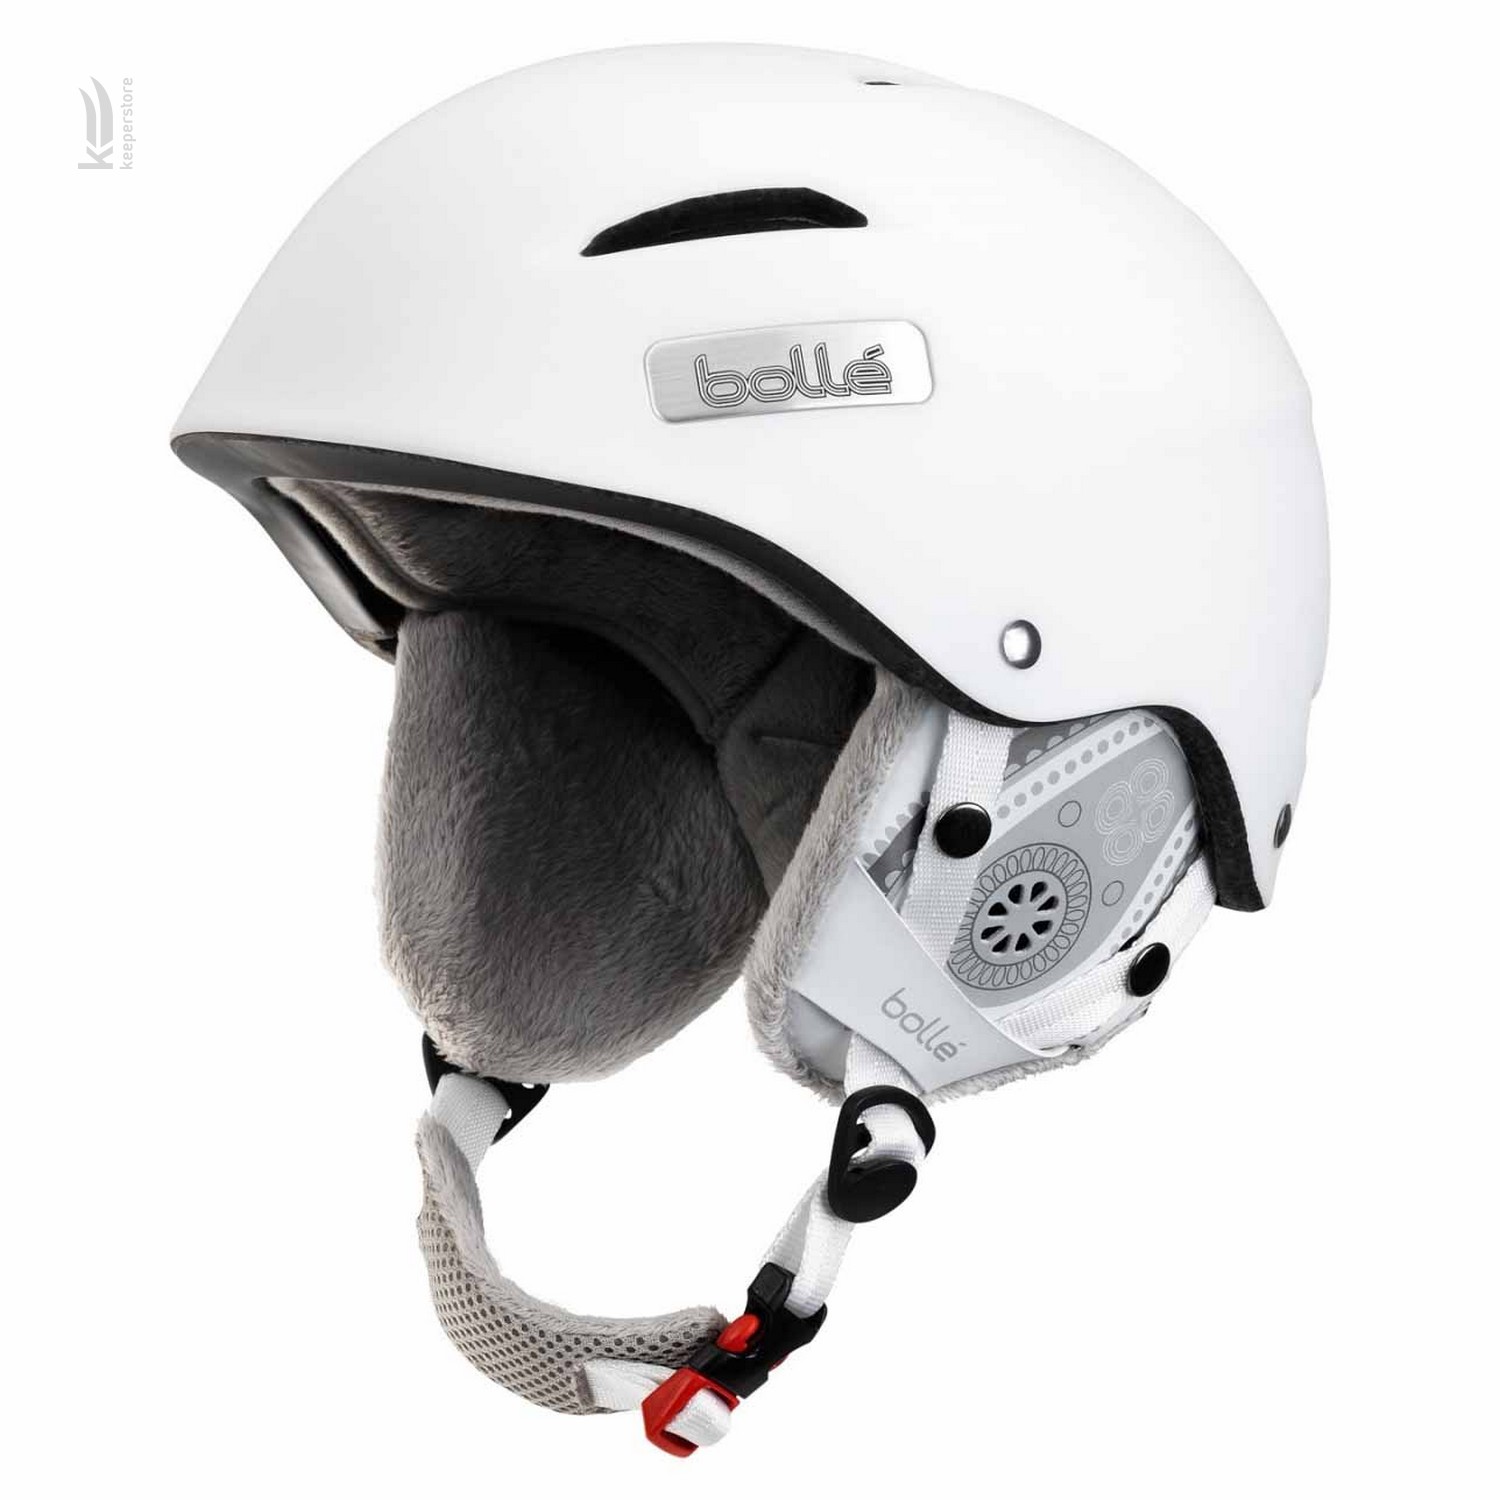 Горнолыжный шлем Bolle Bolle B-STAR Soft White Arabesque -58/61